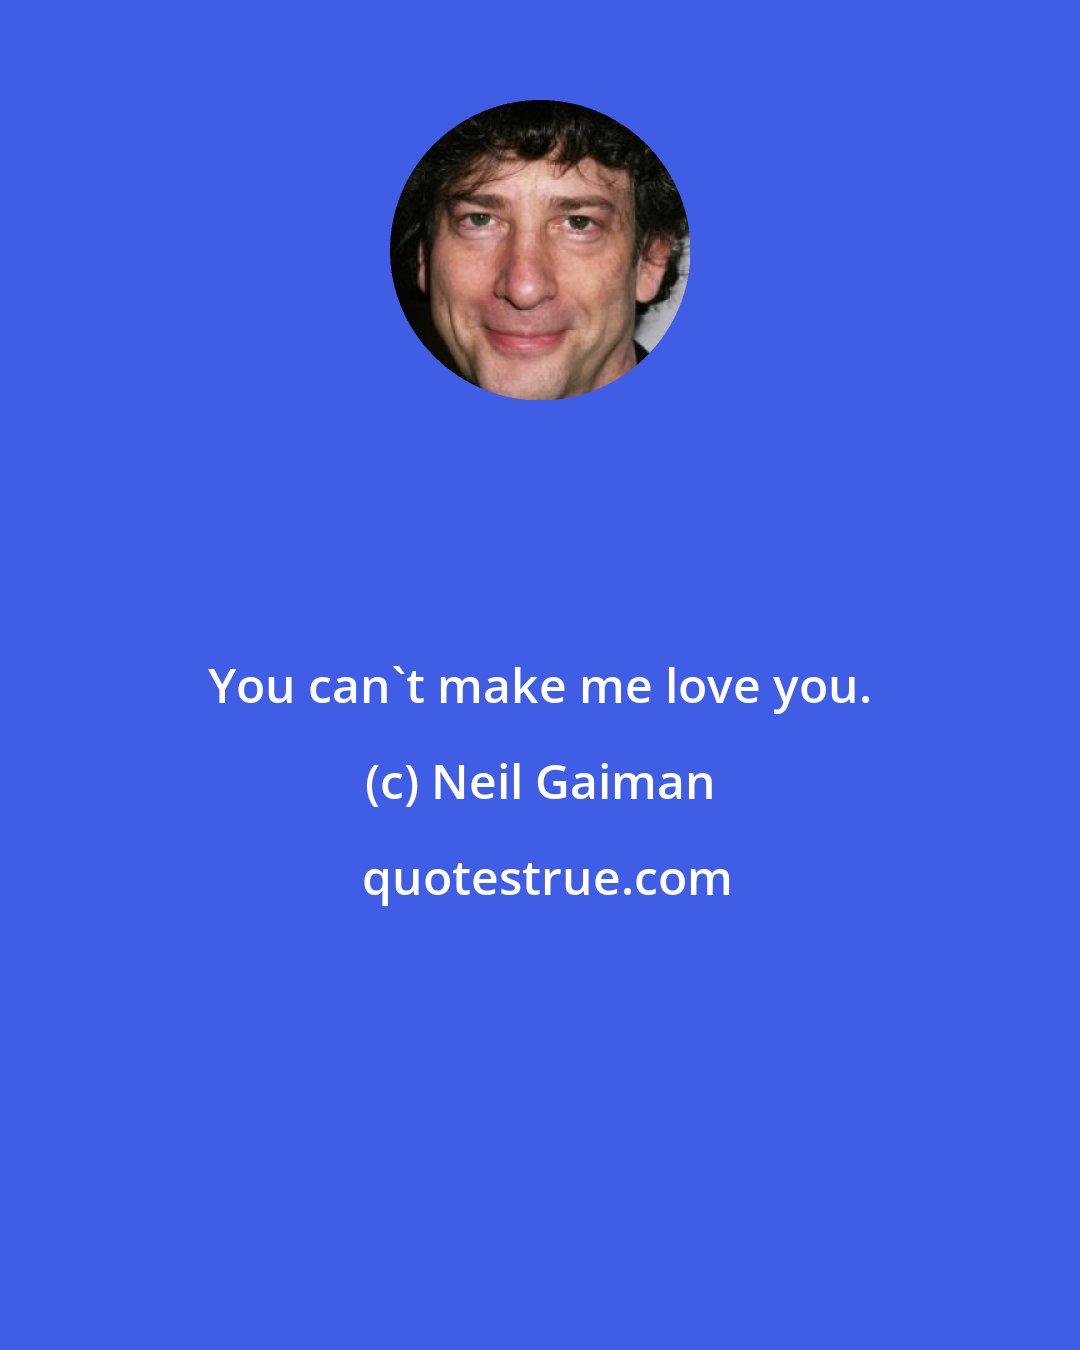 Neil Gaiman: You can't make me love you.